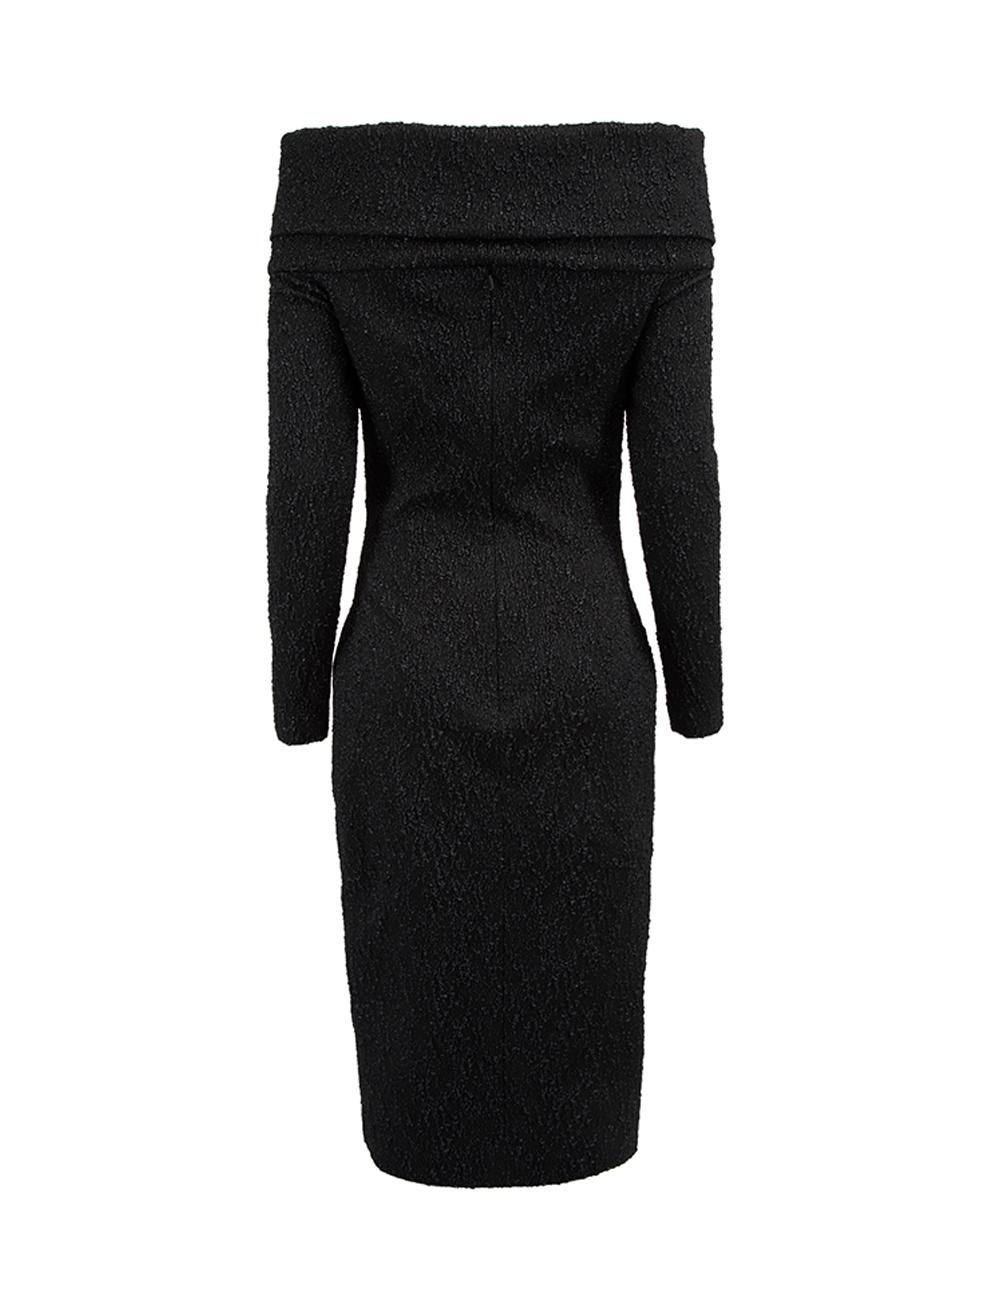 Oscar de la Renta Women's Black Textured Off Shoulder Long Sleeve Dress In New Condition For Sale In London, GB